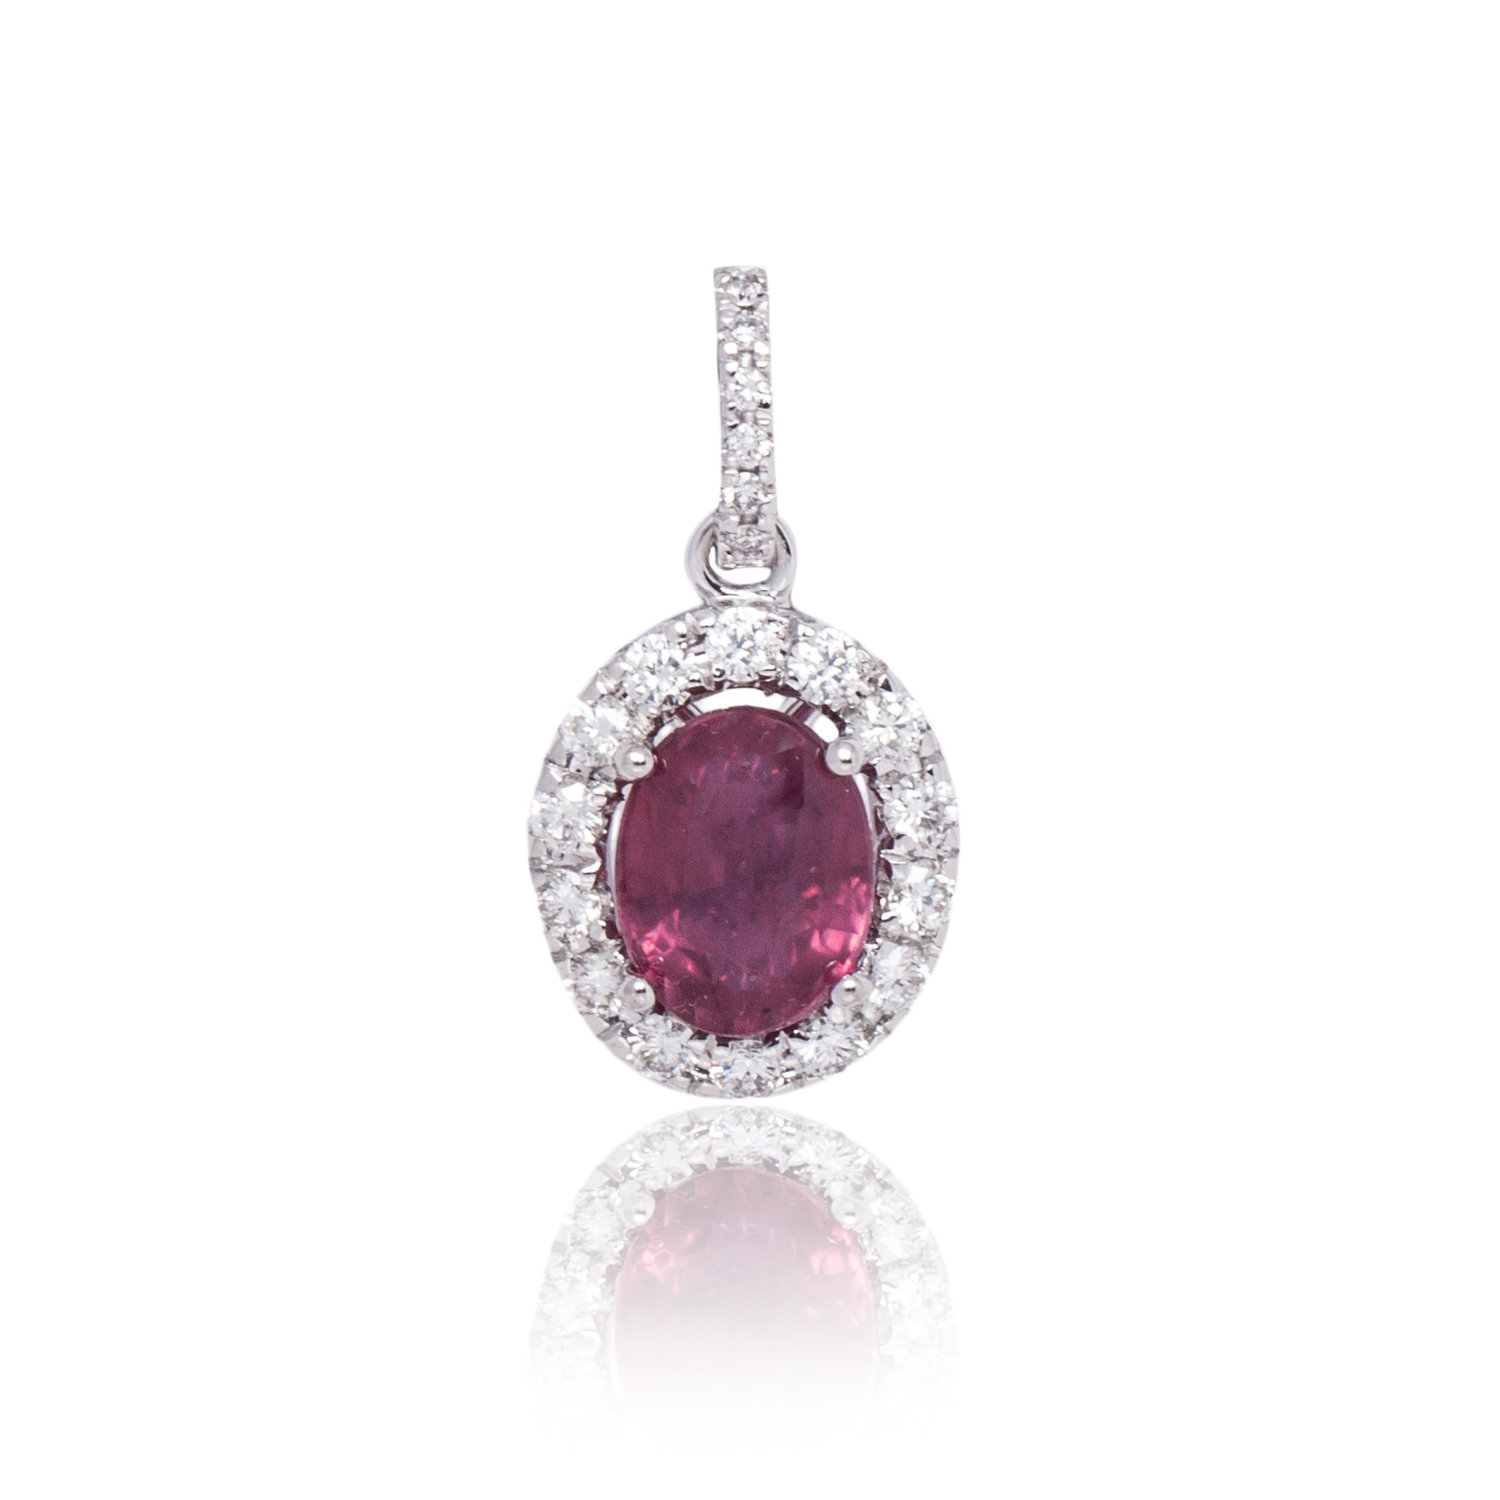 99-continental-jewels-manufacturers-pendant-cjp000099-18k-white-gold-vvs1-diamonds-red-ruby-oval-pendant.jpg